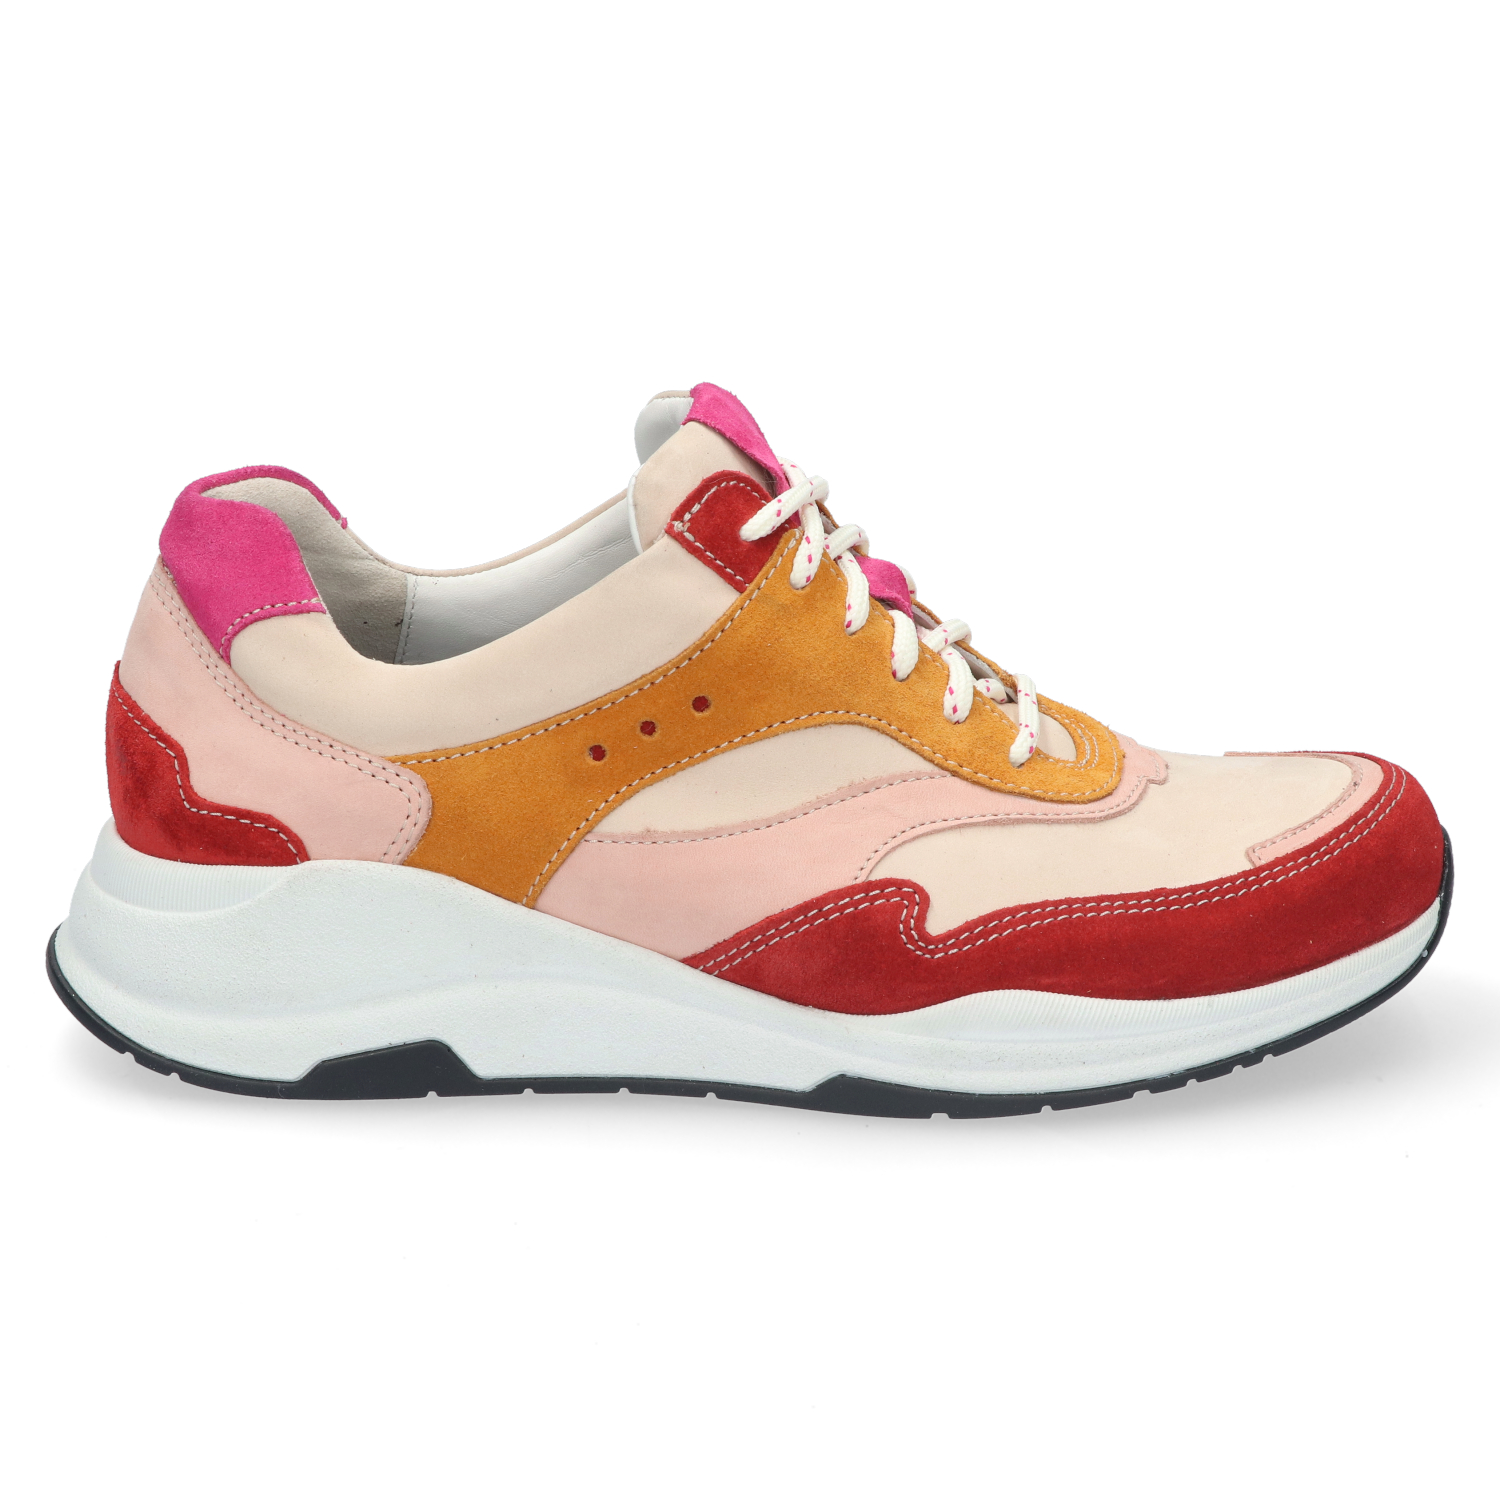 Durea 6267 Sneaker Rood/Roze G